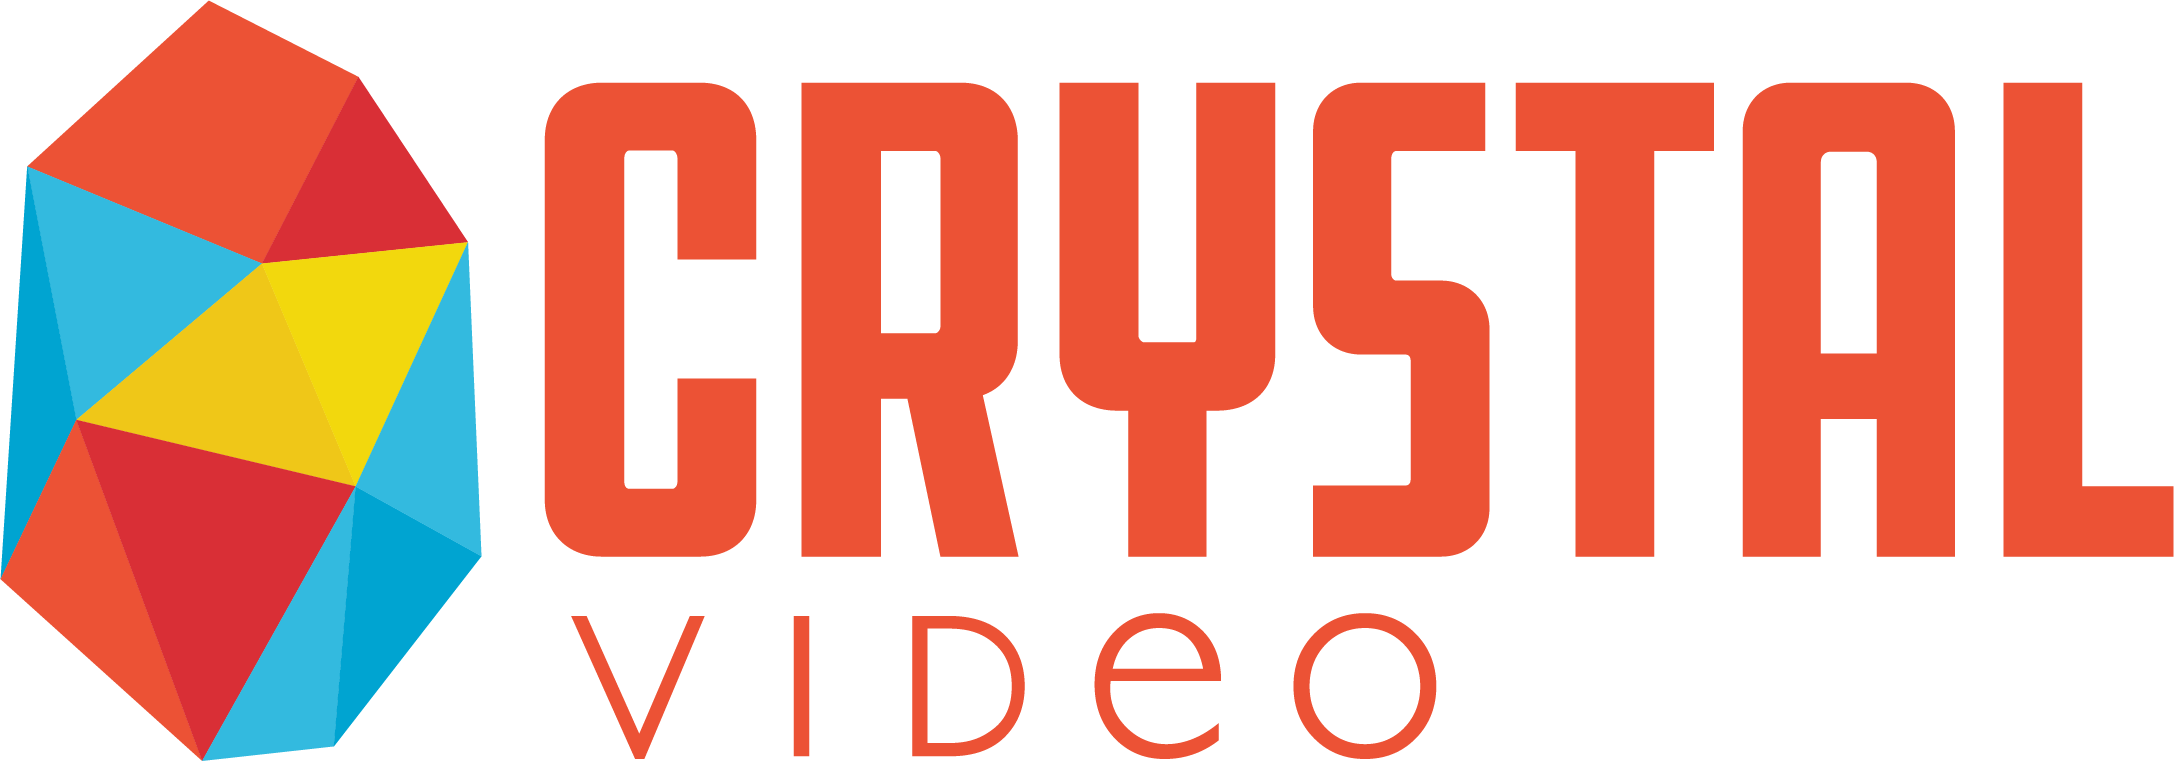 Crystal Video, LLC